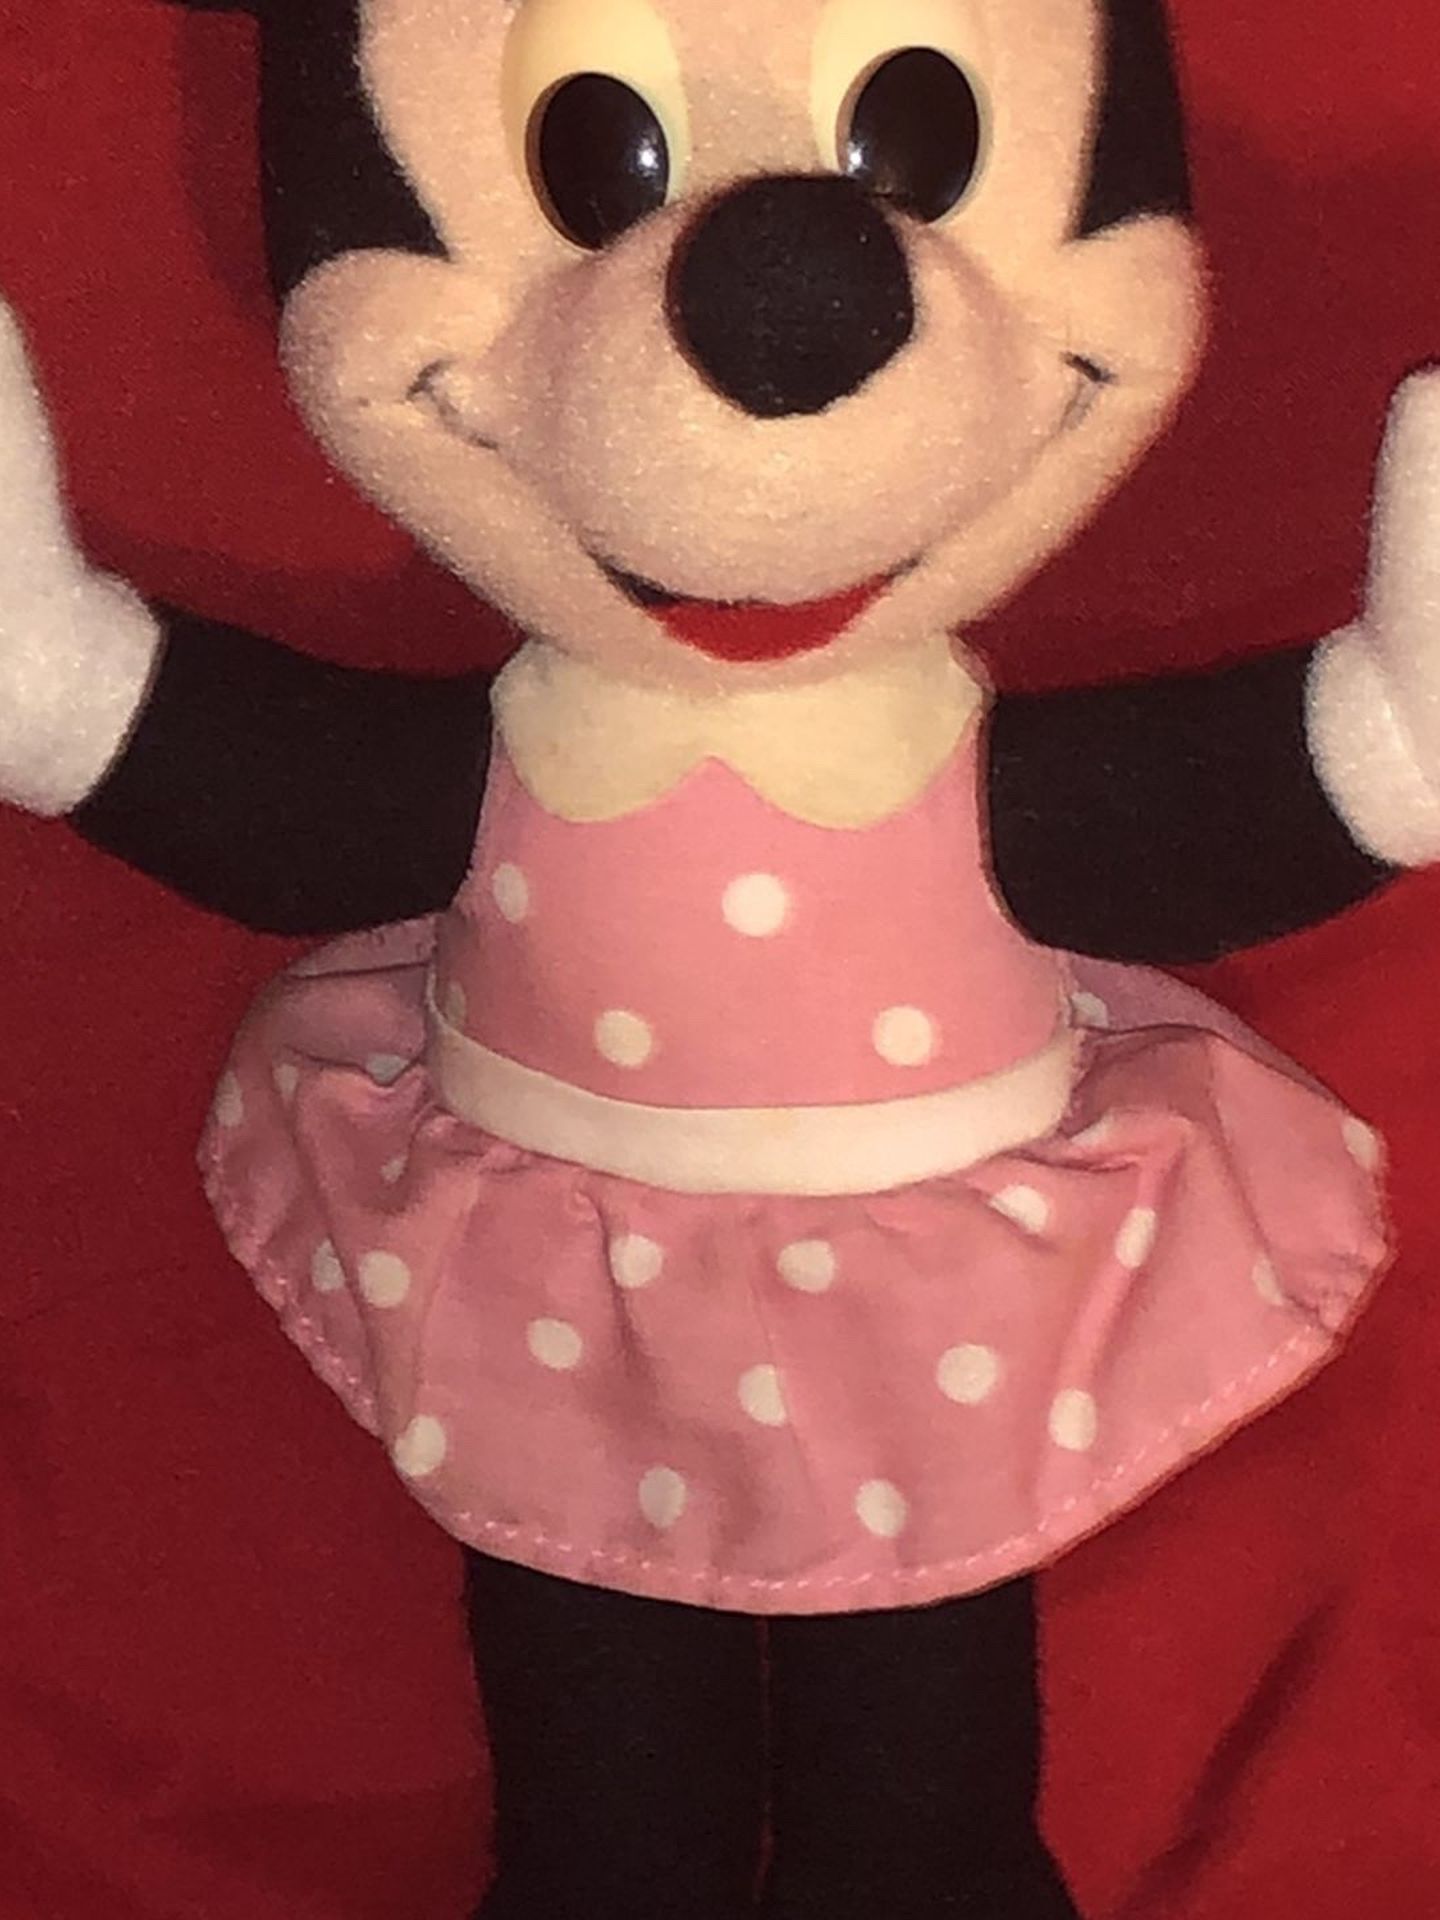 Disney Vintage Playskool Stuffed Minnie Mouse 9” Plush Stuffed Animal - Pink Dress Blue Bow 1989 Doll